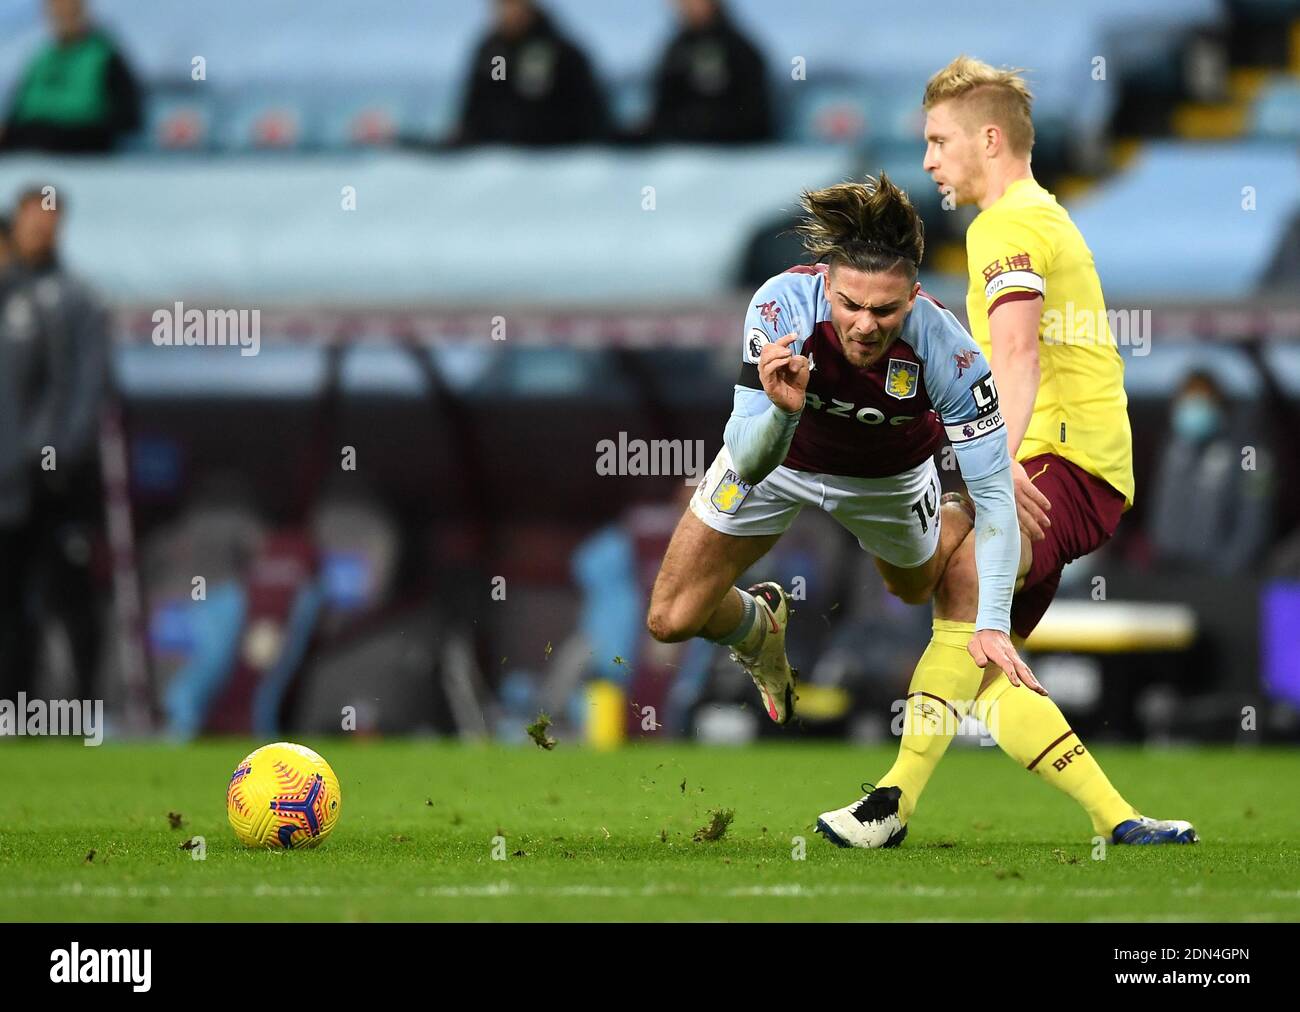 Burnley's Ben Mee (right) tackles Aston Villa's Jack Grealish during the Premier League match at Villa Park, Birmingham. Stock Photo